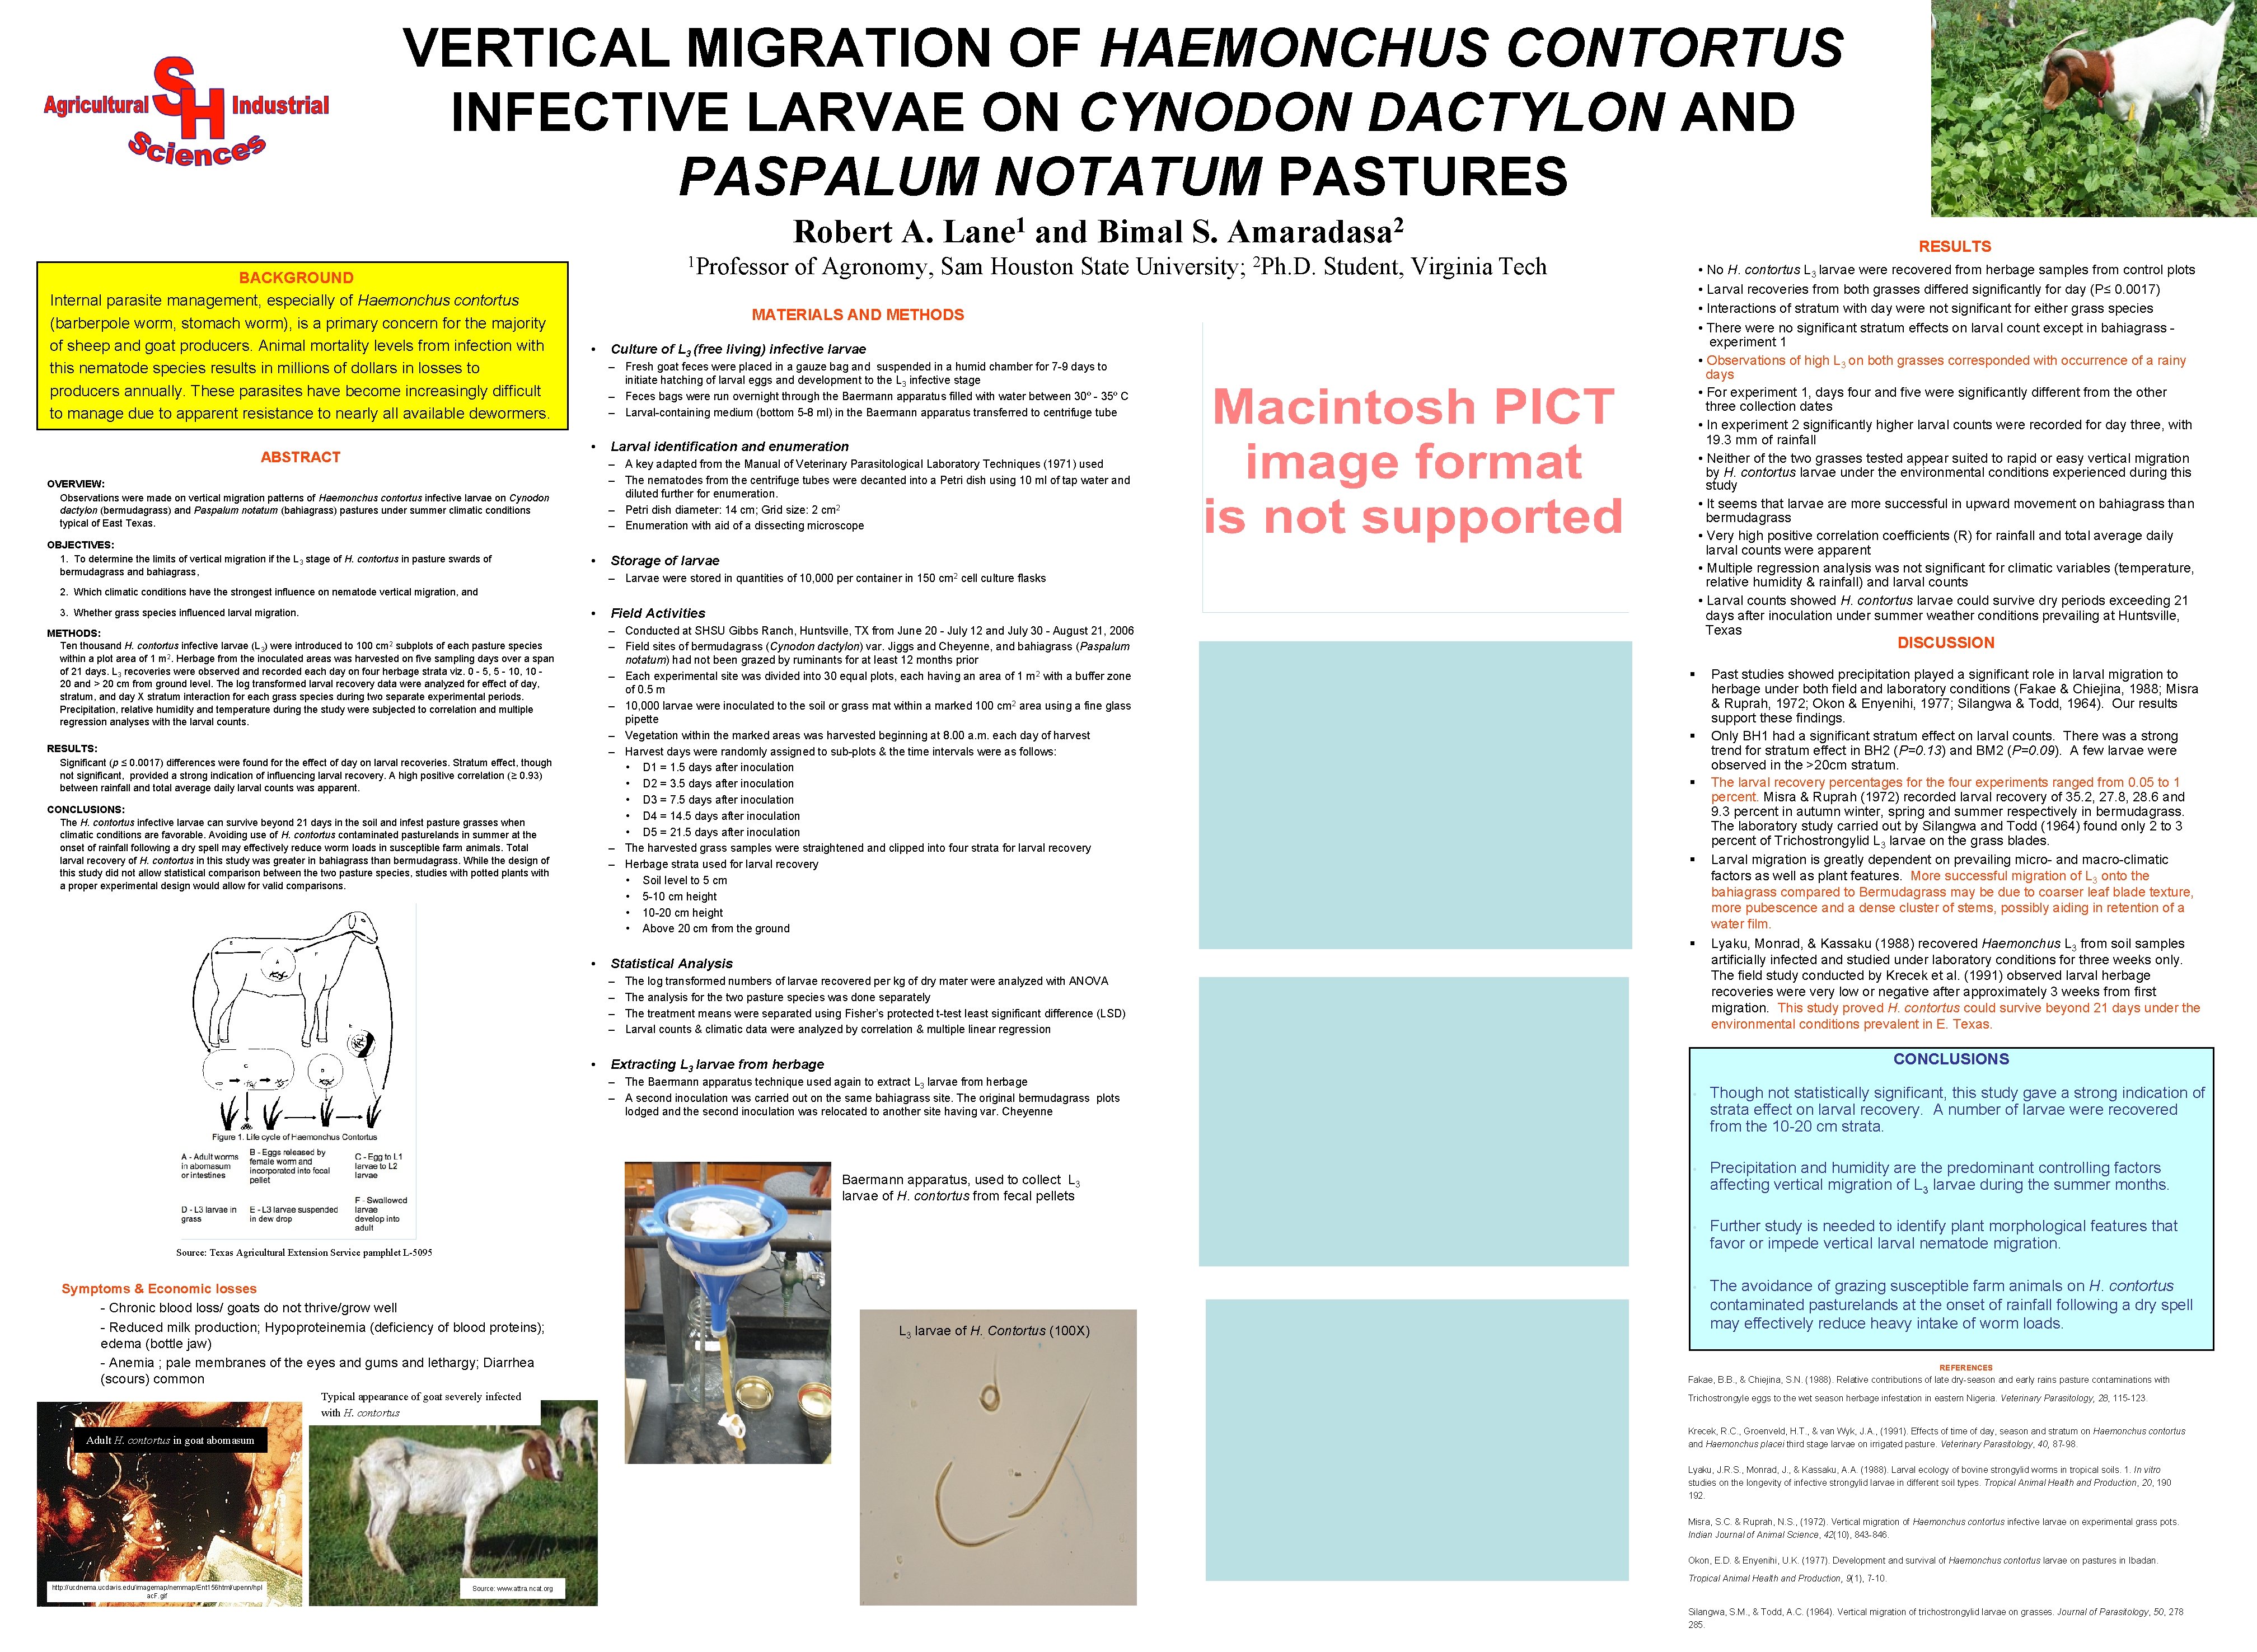 VERTICAL MIGRATION OF HAEMONCHUS CONTORTUS INFECTIVE LARVAE ON CYNODON DACTYLON AND PASPALUM NOTATUM PASTURES